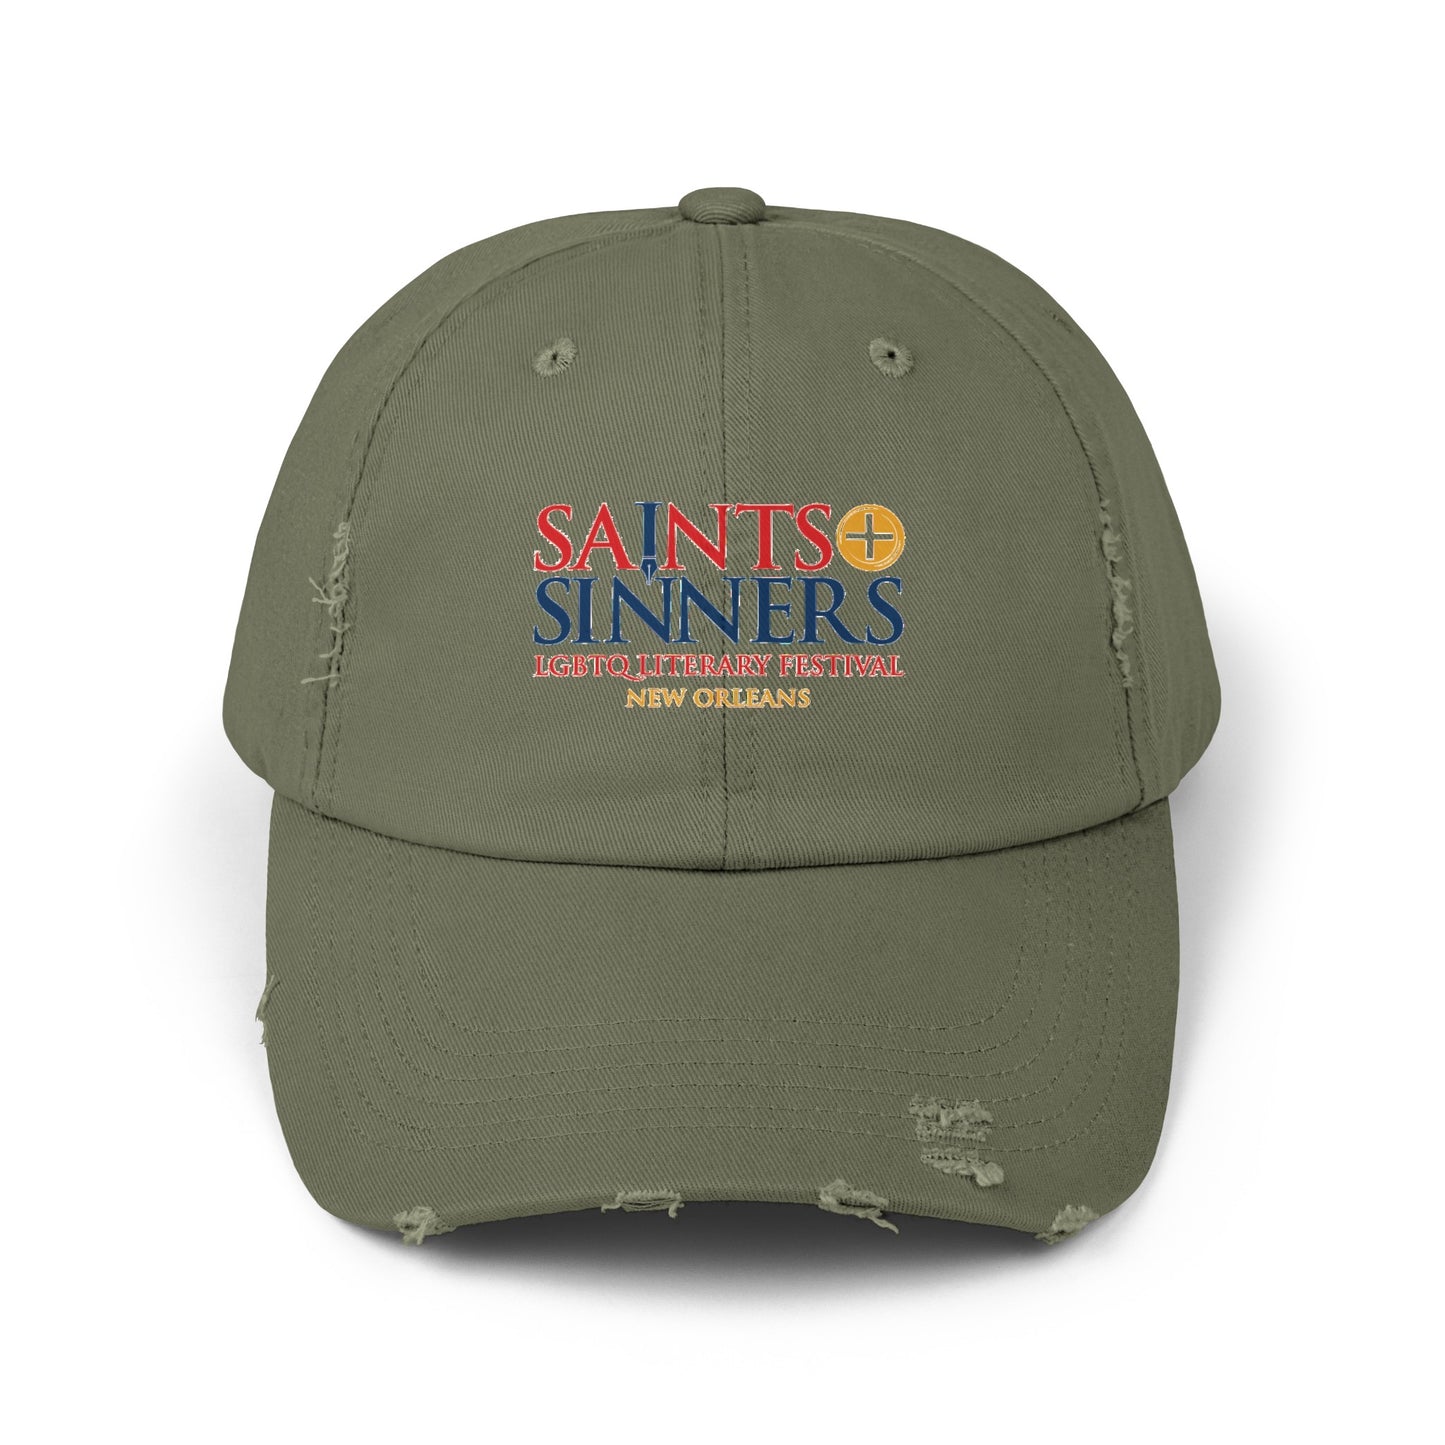 Saints & Sinners Logo Distressed Cap